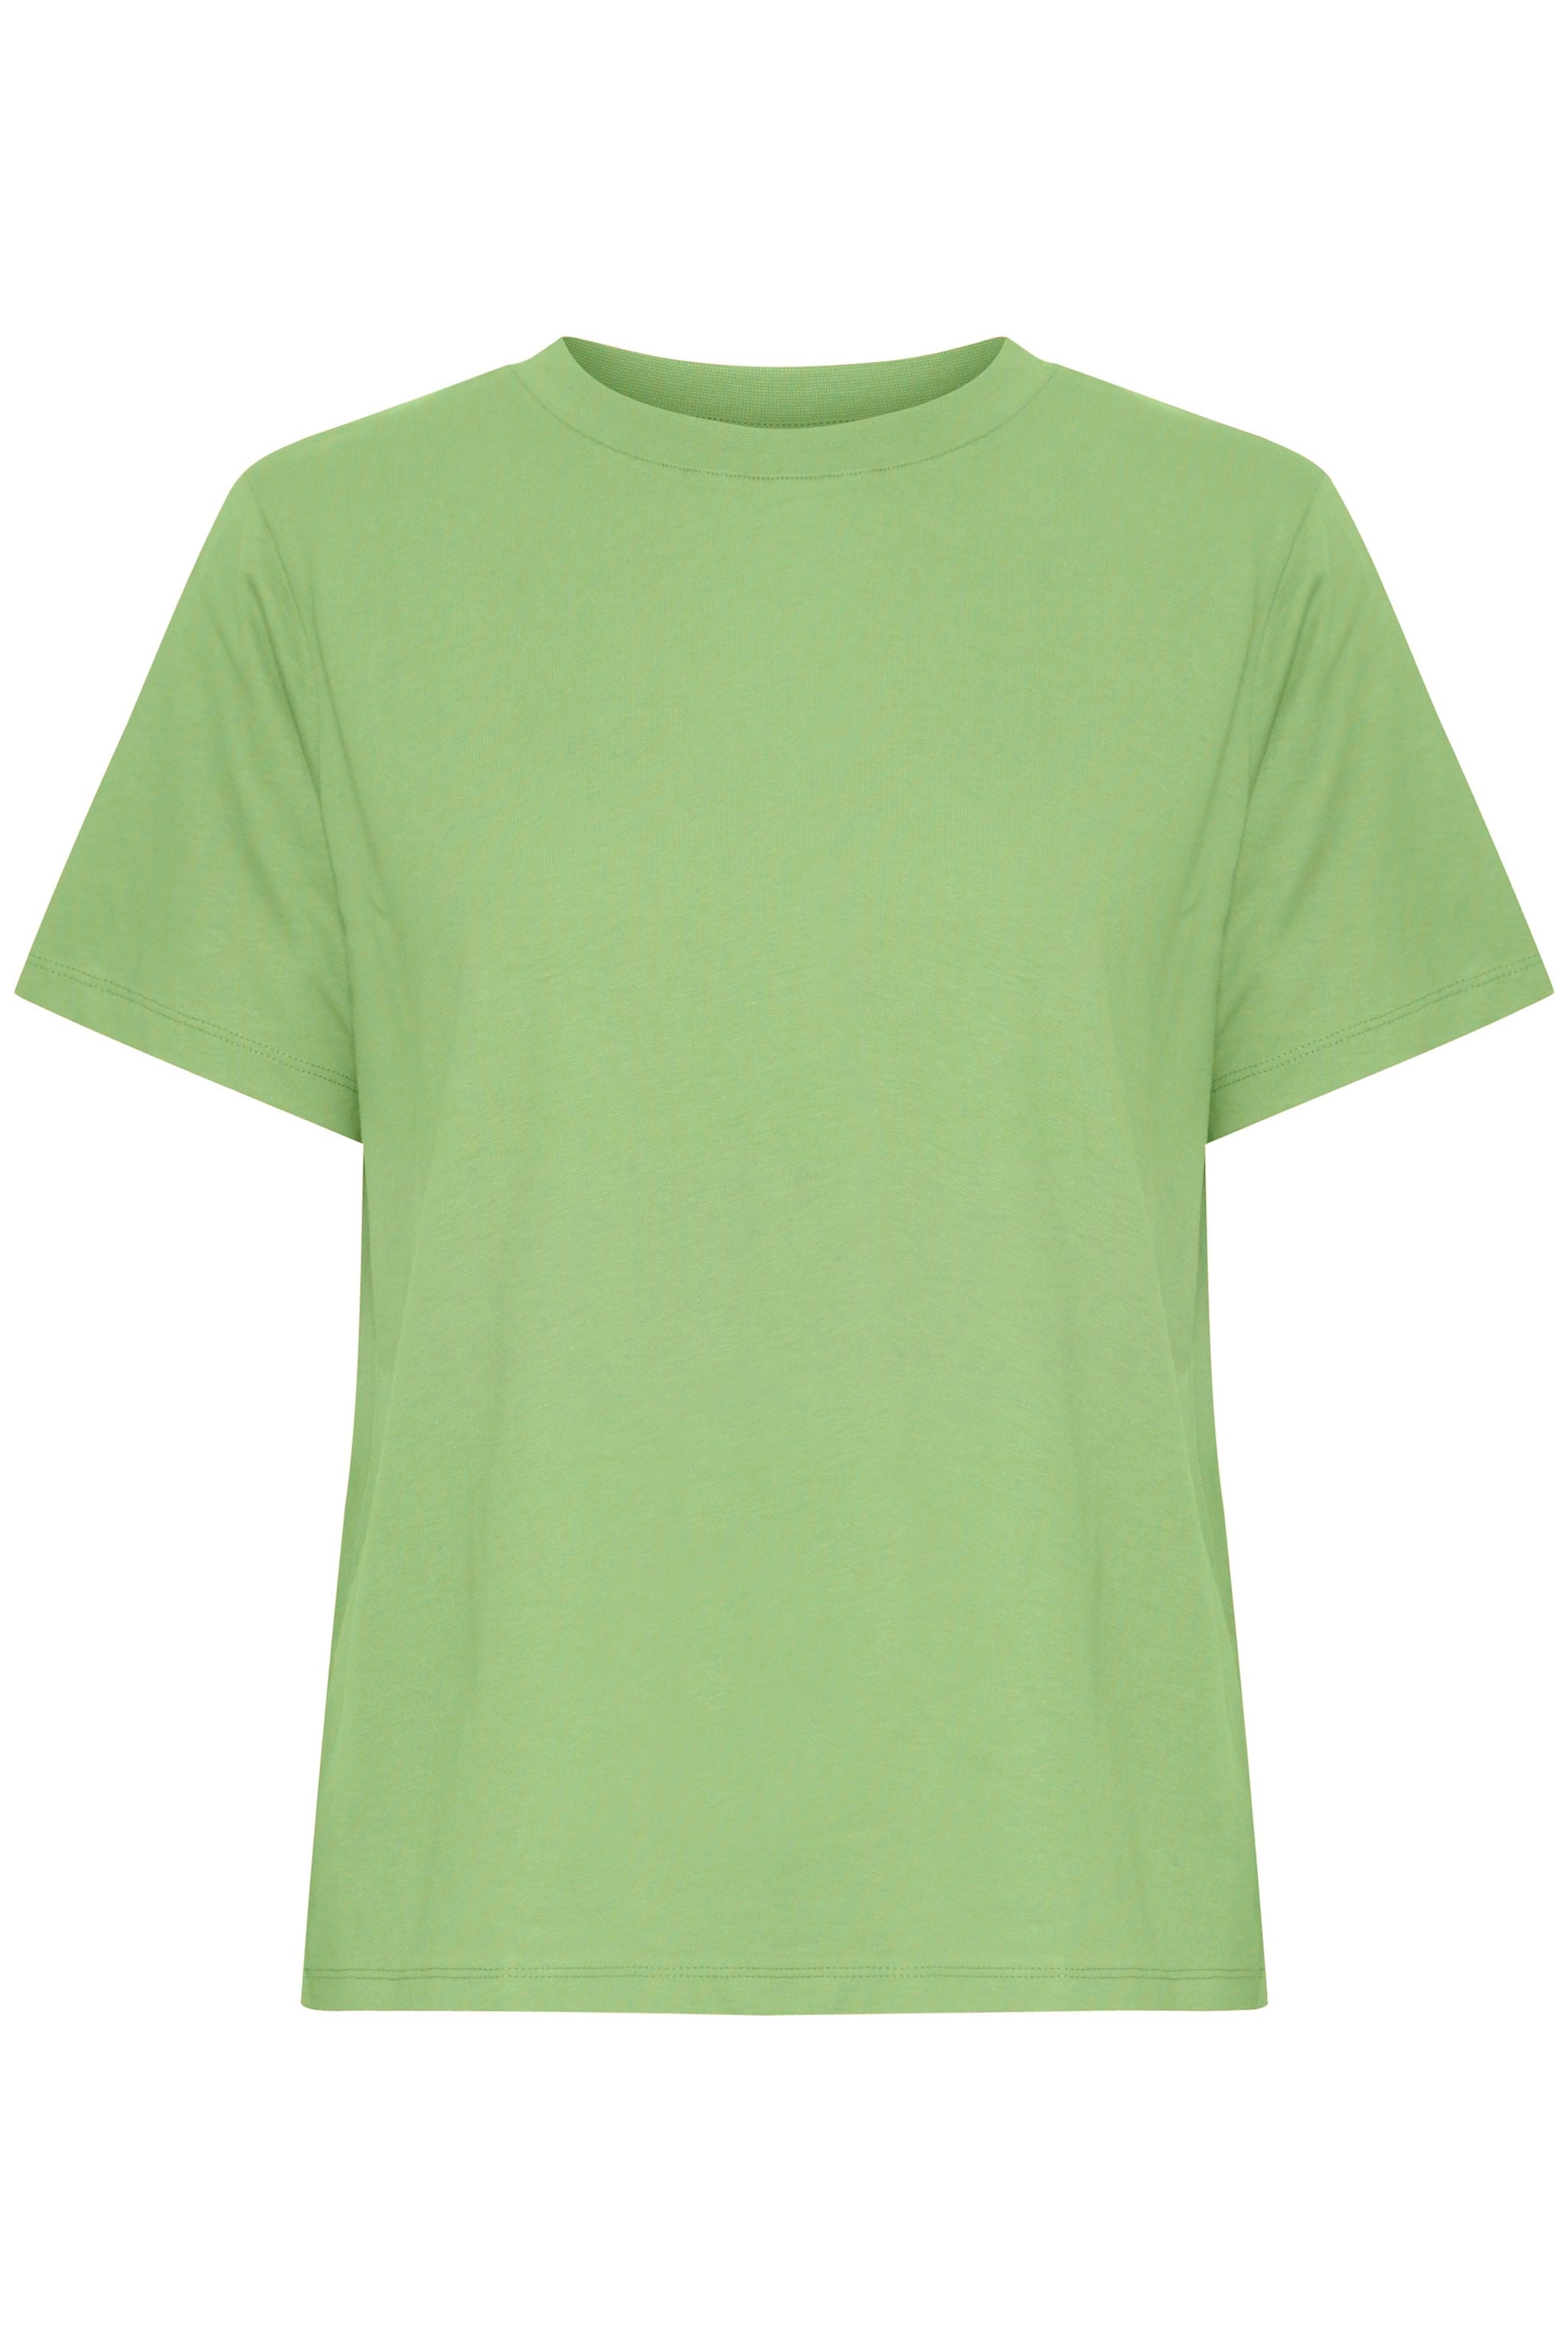 ICHI Everyday Relaxed Plain T-Shirt - Green Tea